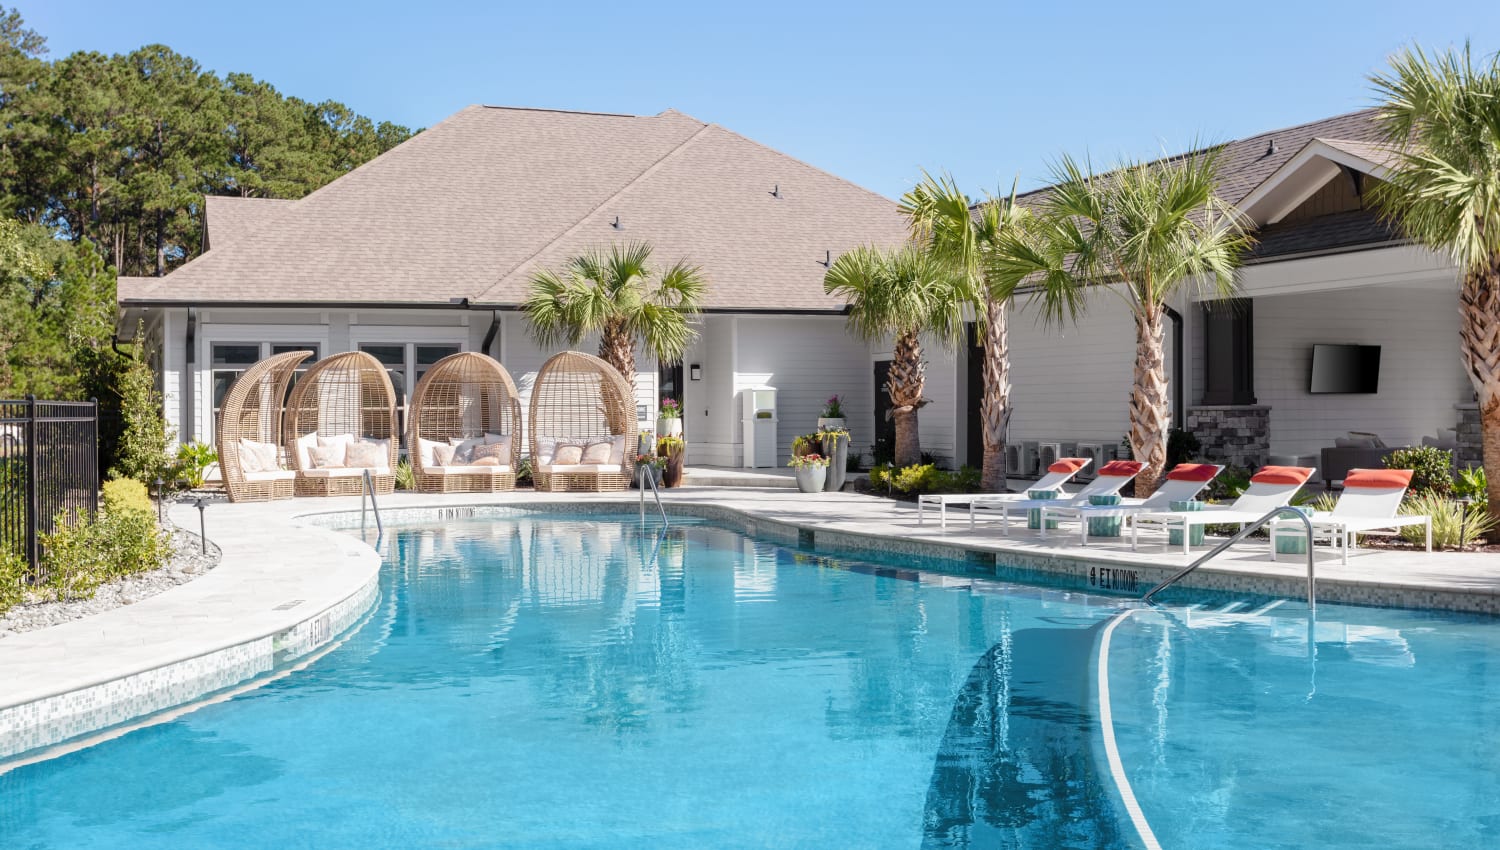 Swimming pool at Alleia Luxury Apartments in Savannah, Georgia